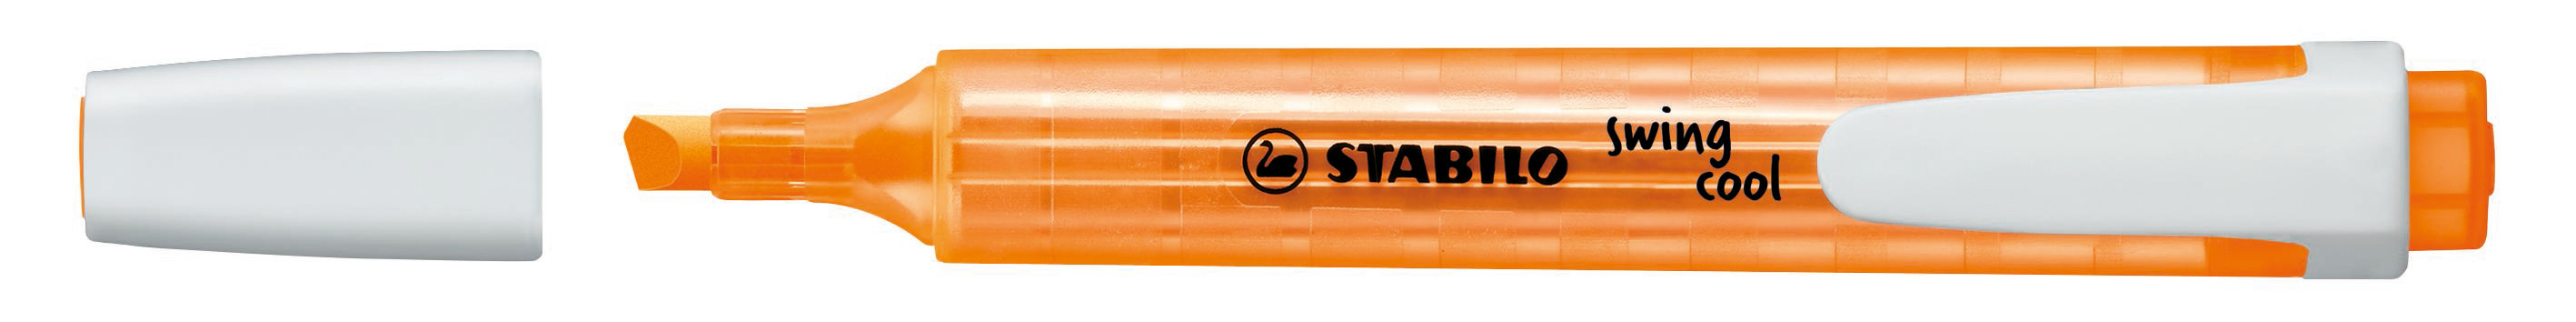 STABILO Swing Cool Leuchtmarker 1-4mm 275-54 orange